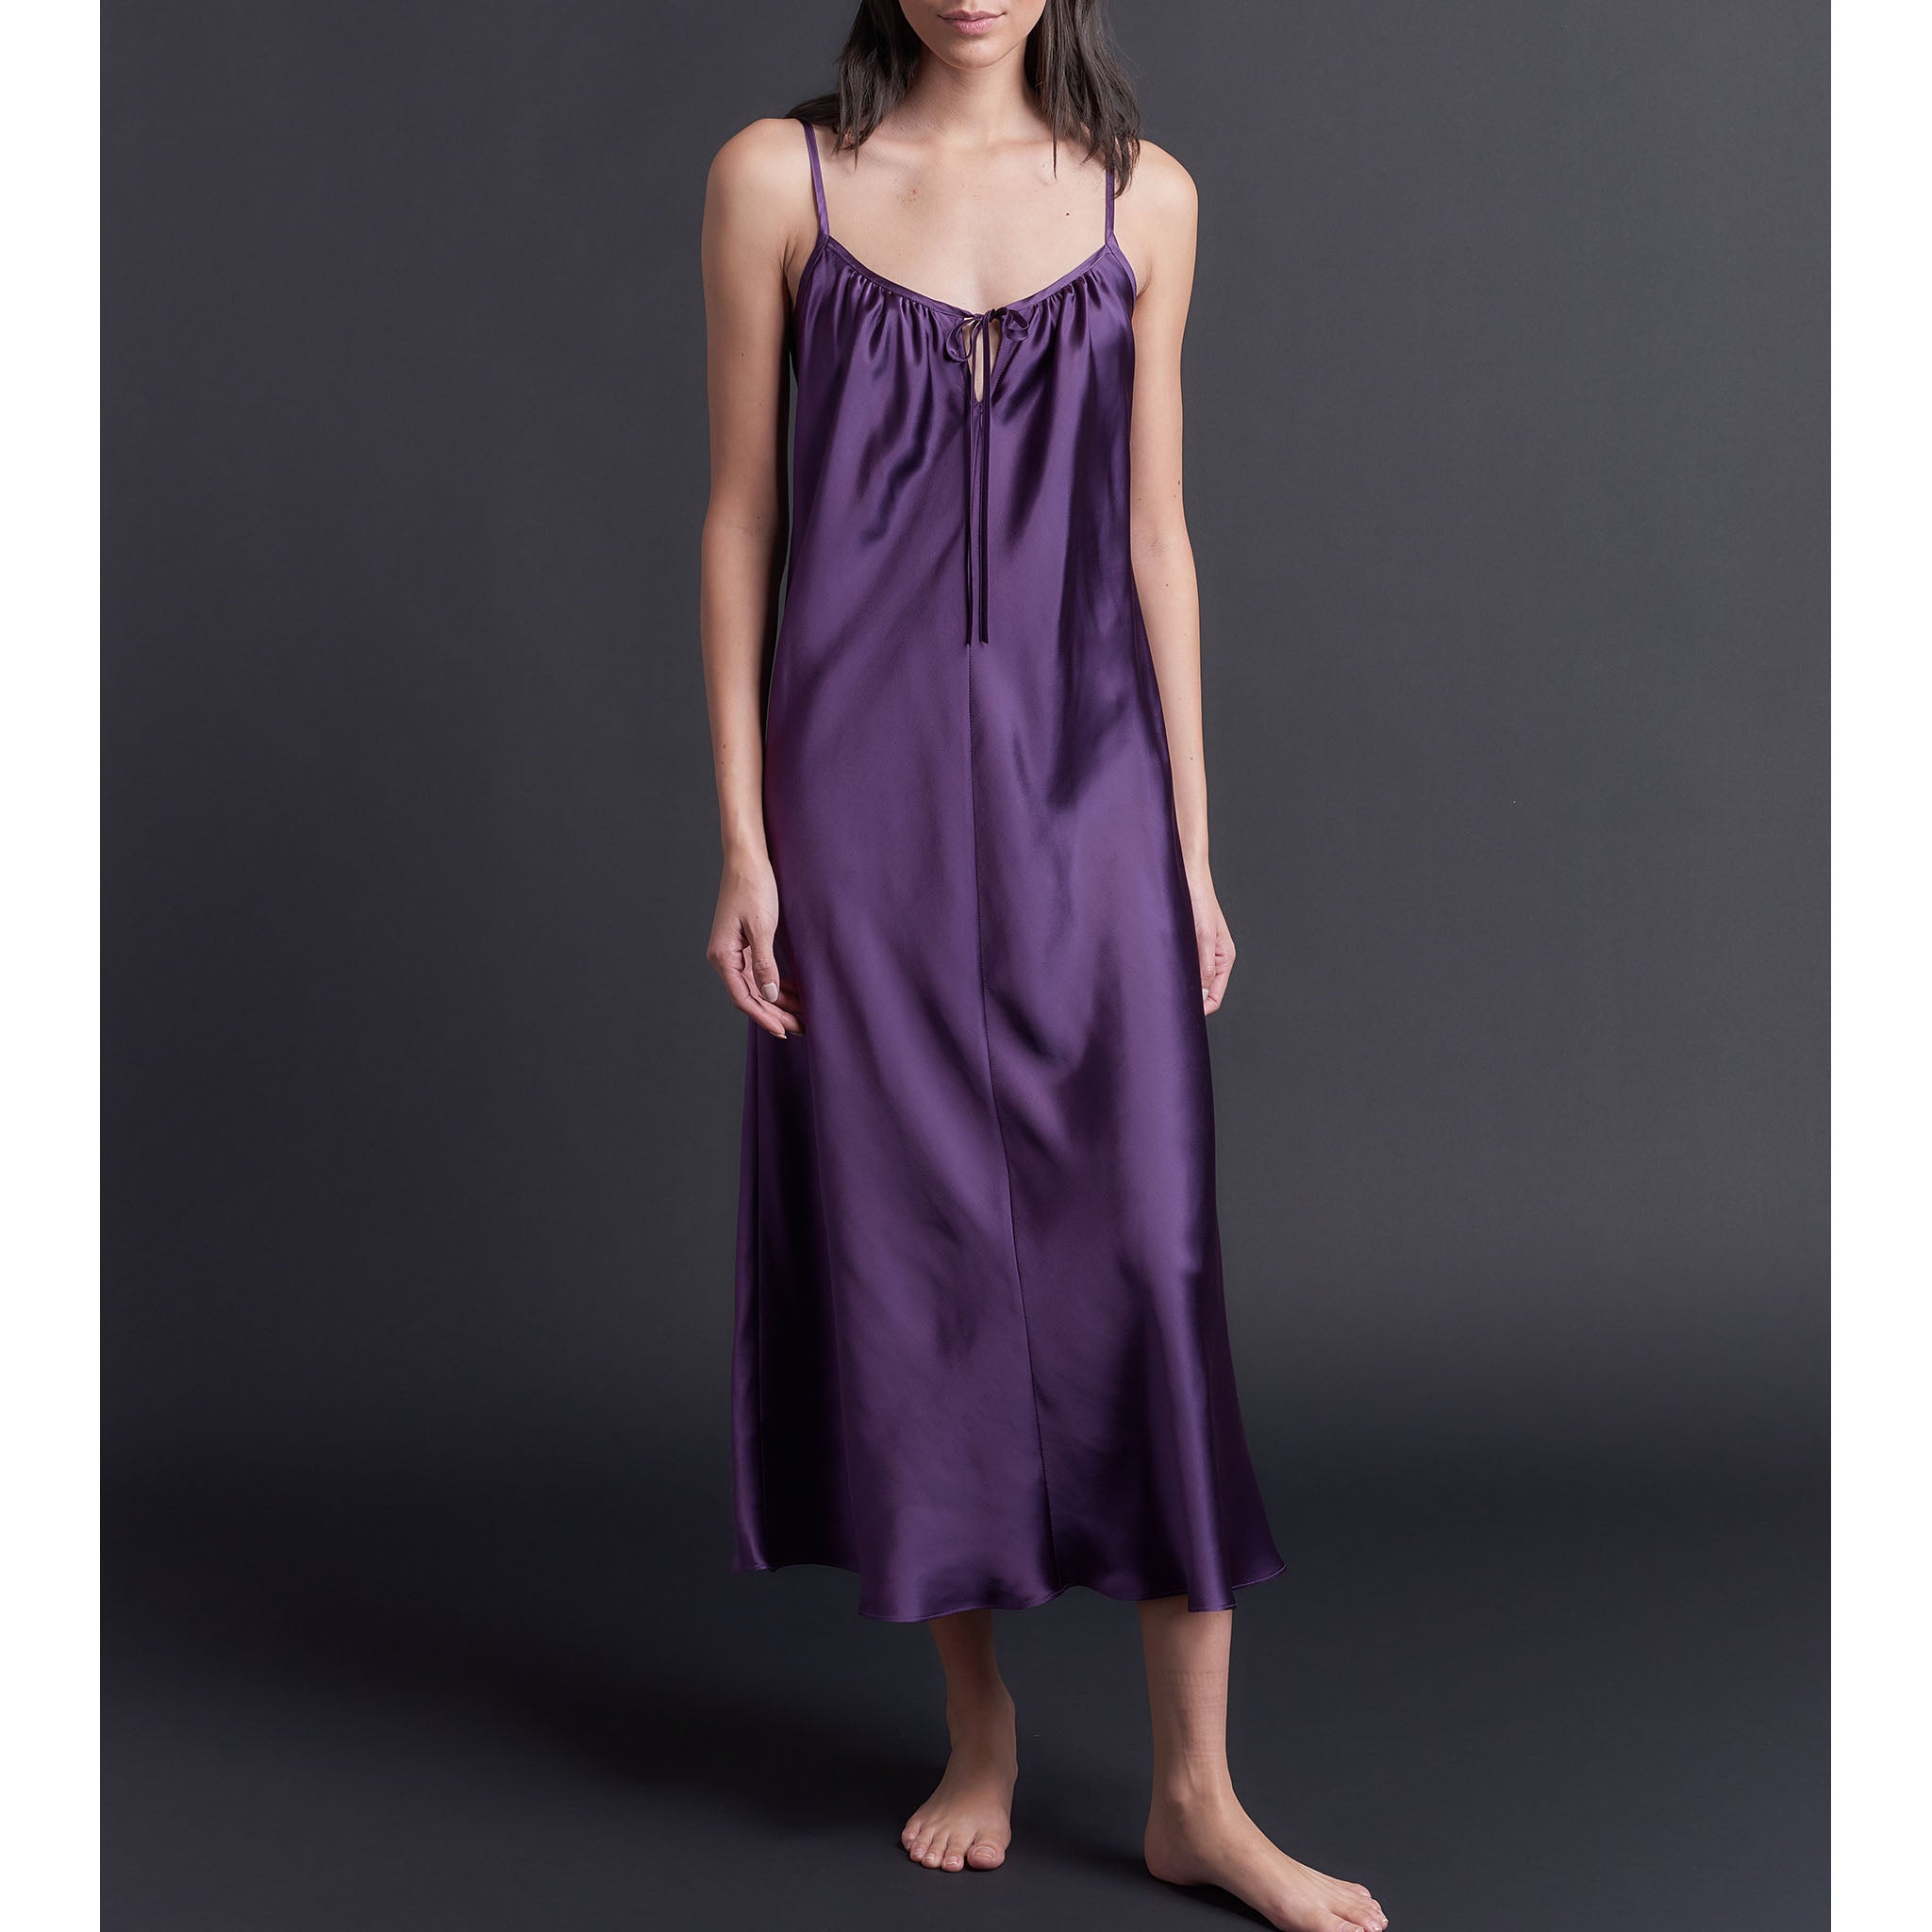 Pin on Slip dress / Night gown